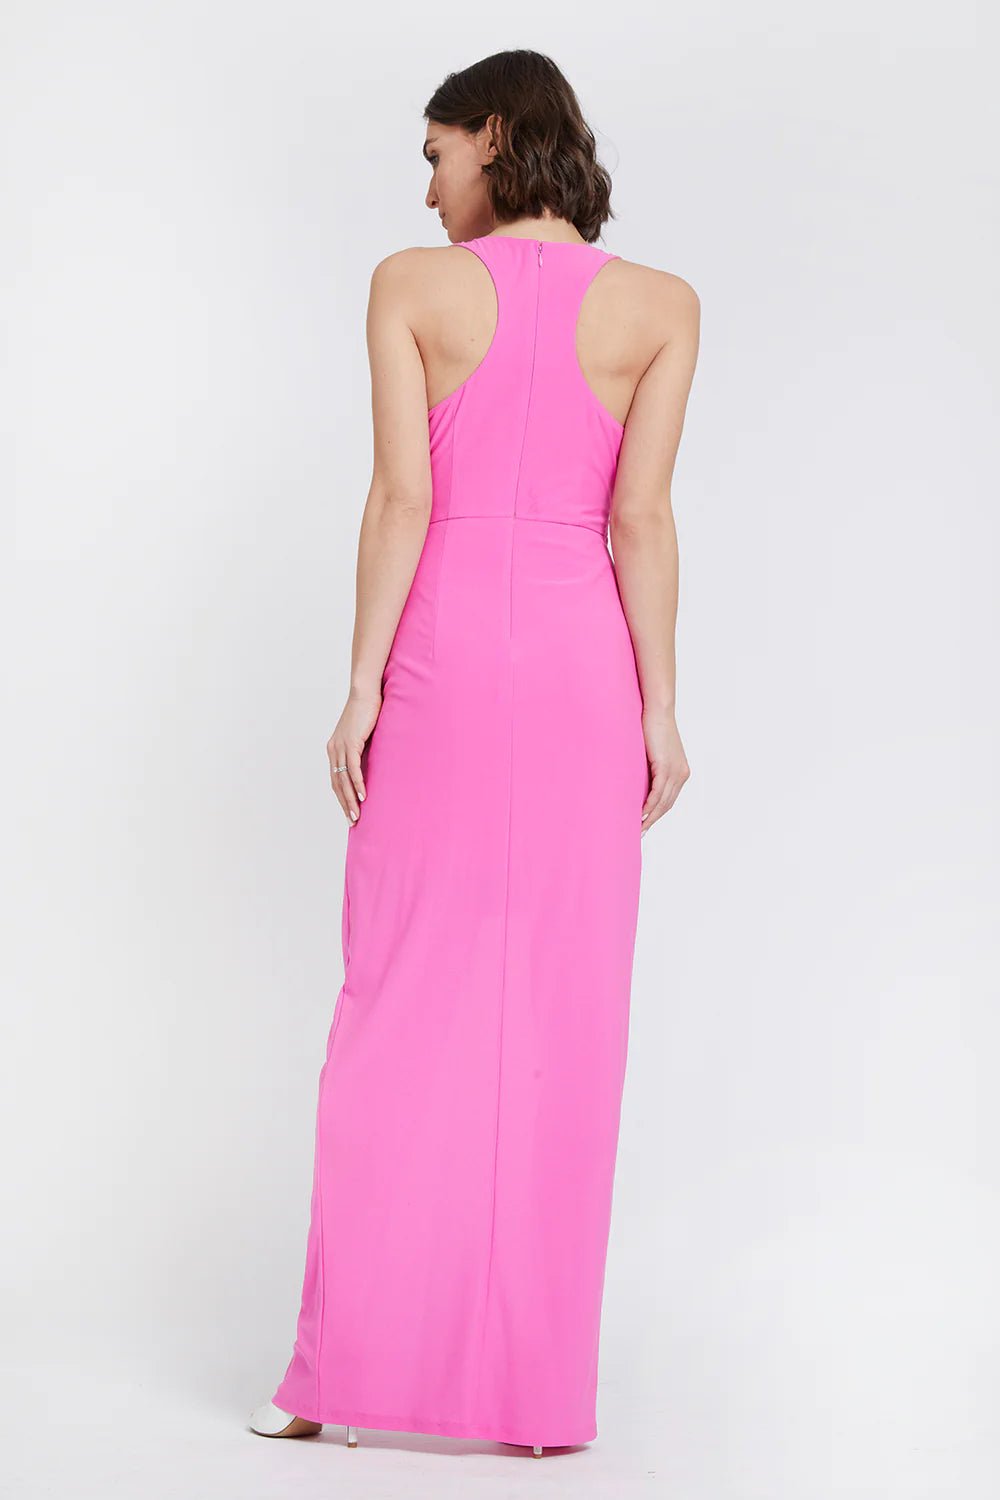 One33 Darcy Dress in Pink - Estilo Boutique